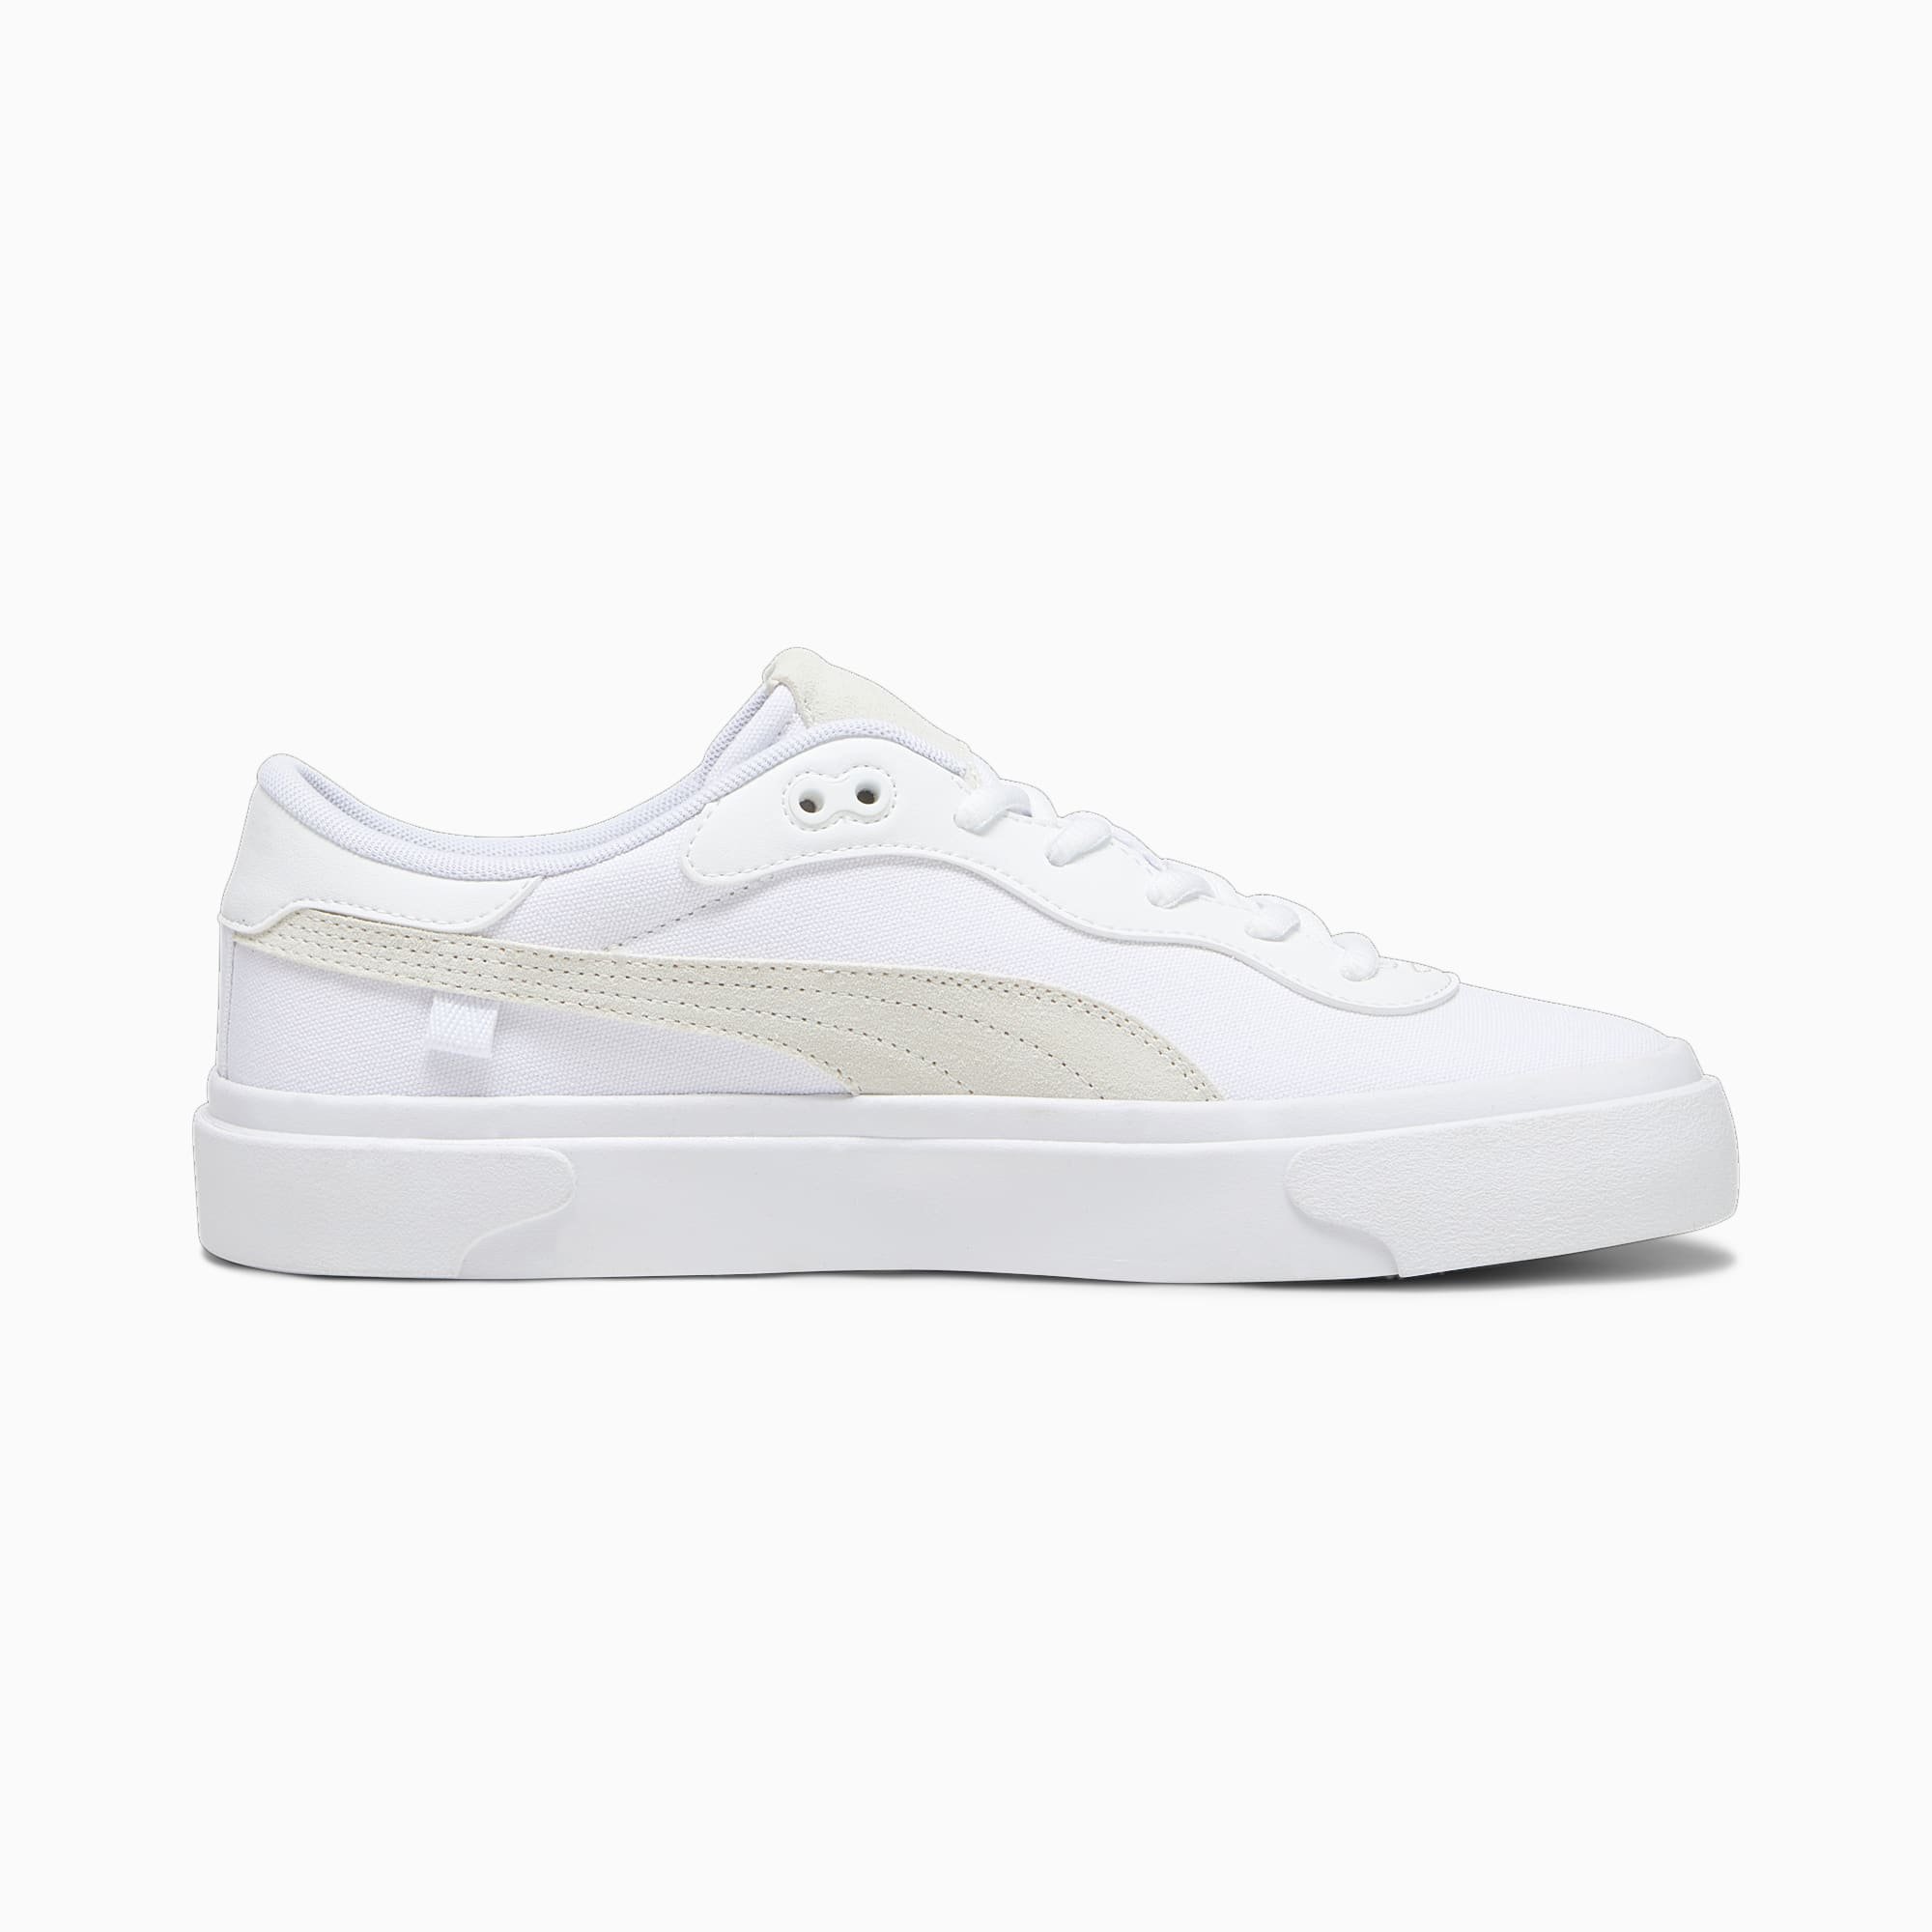 PUMA Capri Royale Sneakers Schuhe, Weiß, Größe: 38.5, Accessoires